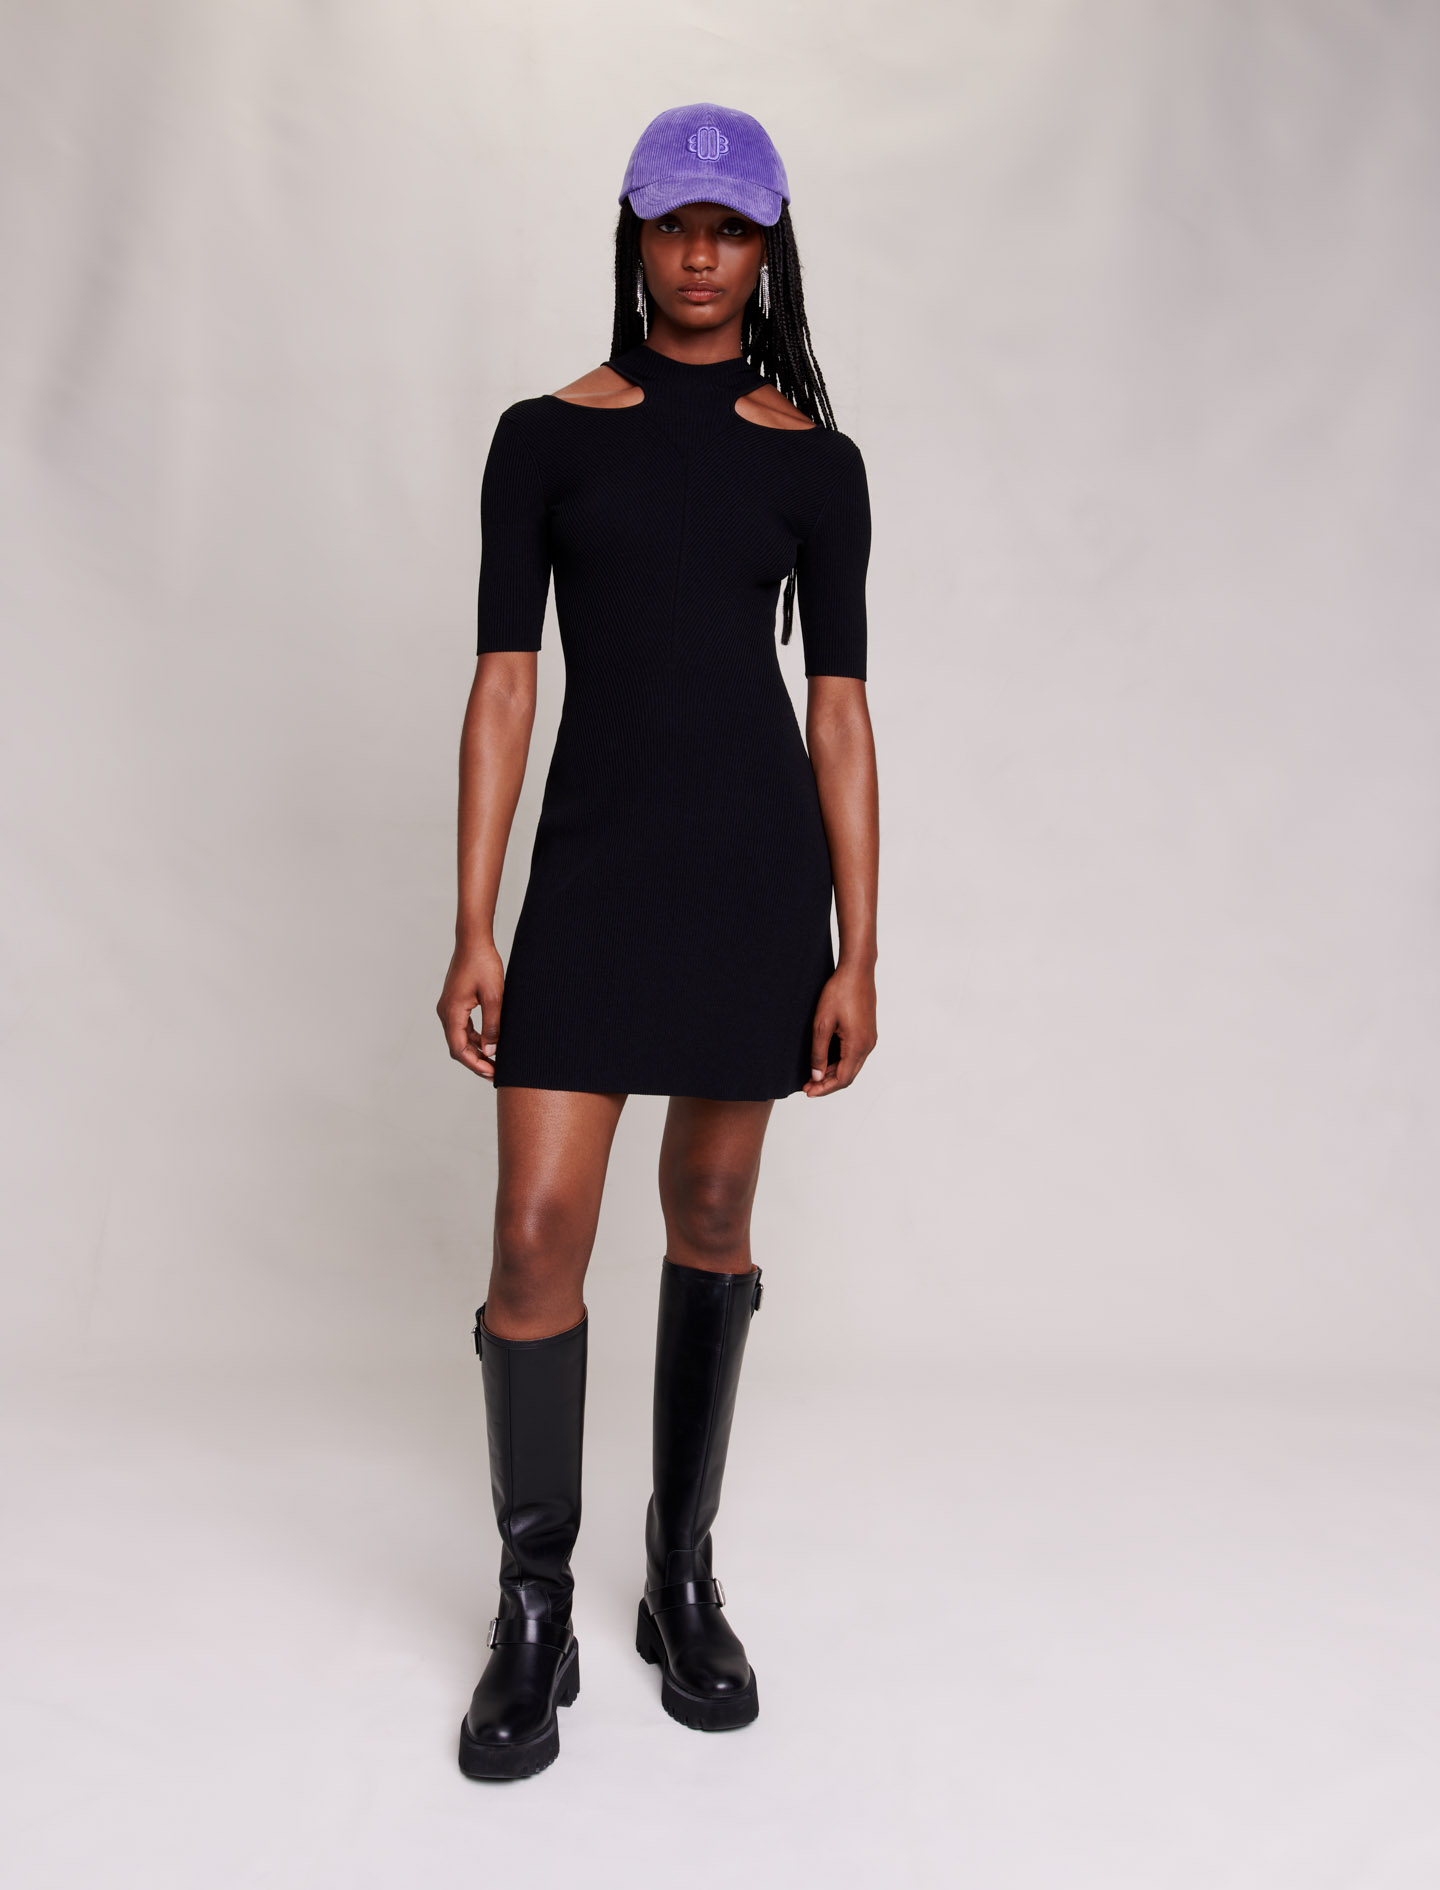 Maje Woman's viscose, Cutaway short dress for Fall/Winter, in color Black / Black